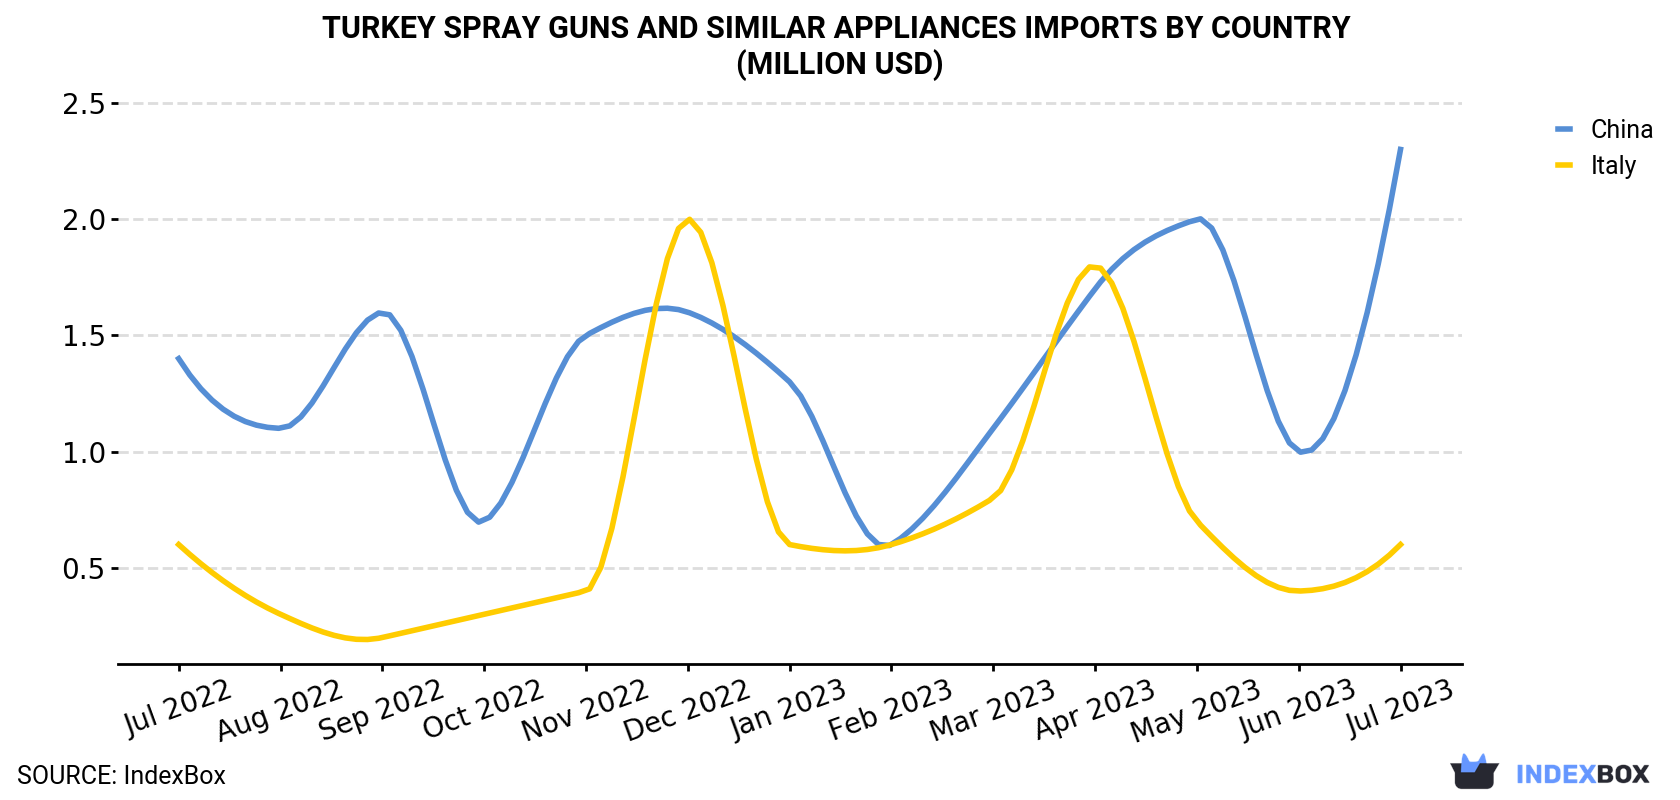 Turkey Spray Guns And Similar Appliances Imports By Country (Million USD)